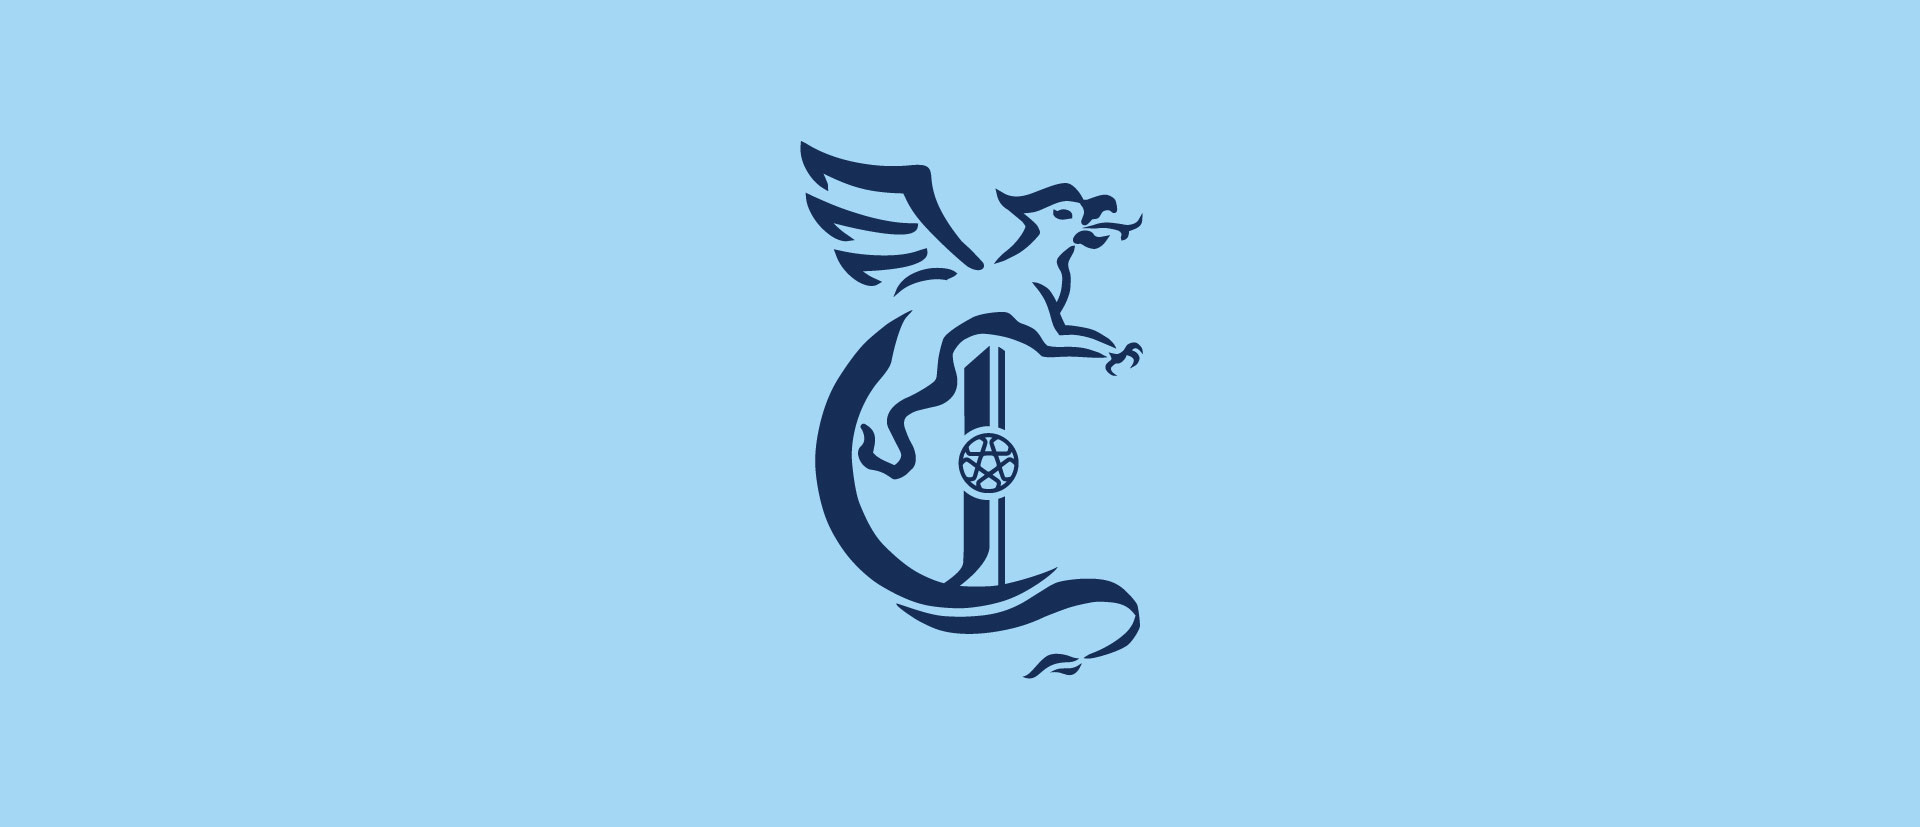 Chattahooligans tenth aniversary logo icon